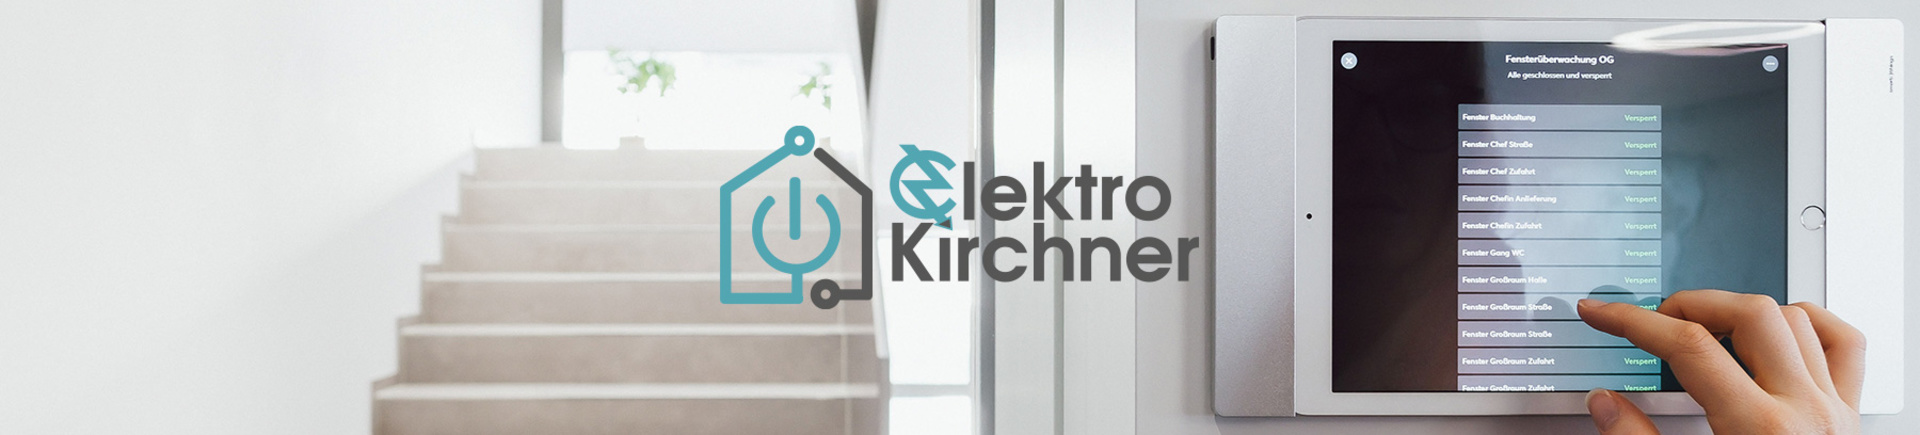 Elektro Kirchner GmbH & Co.KG in Wildflecken